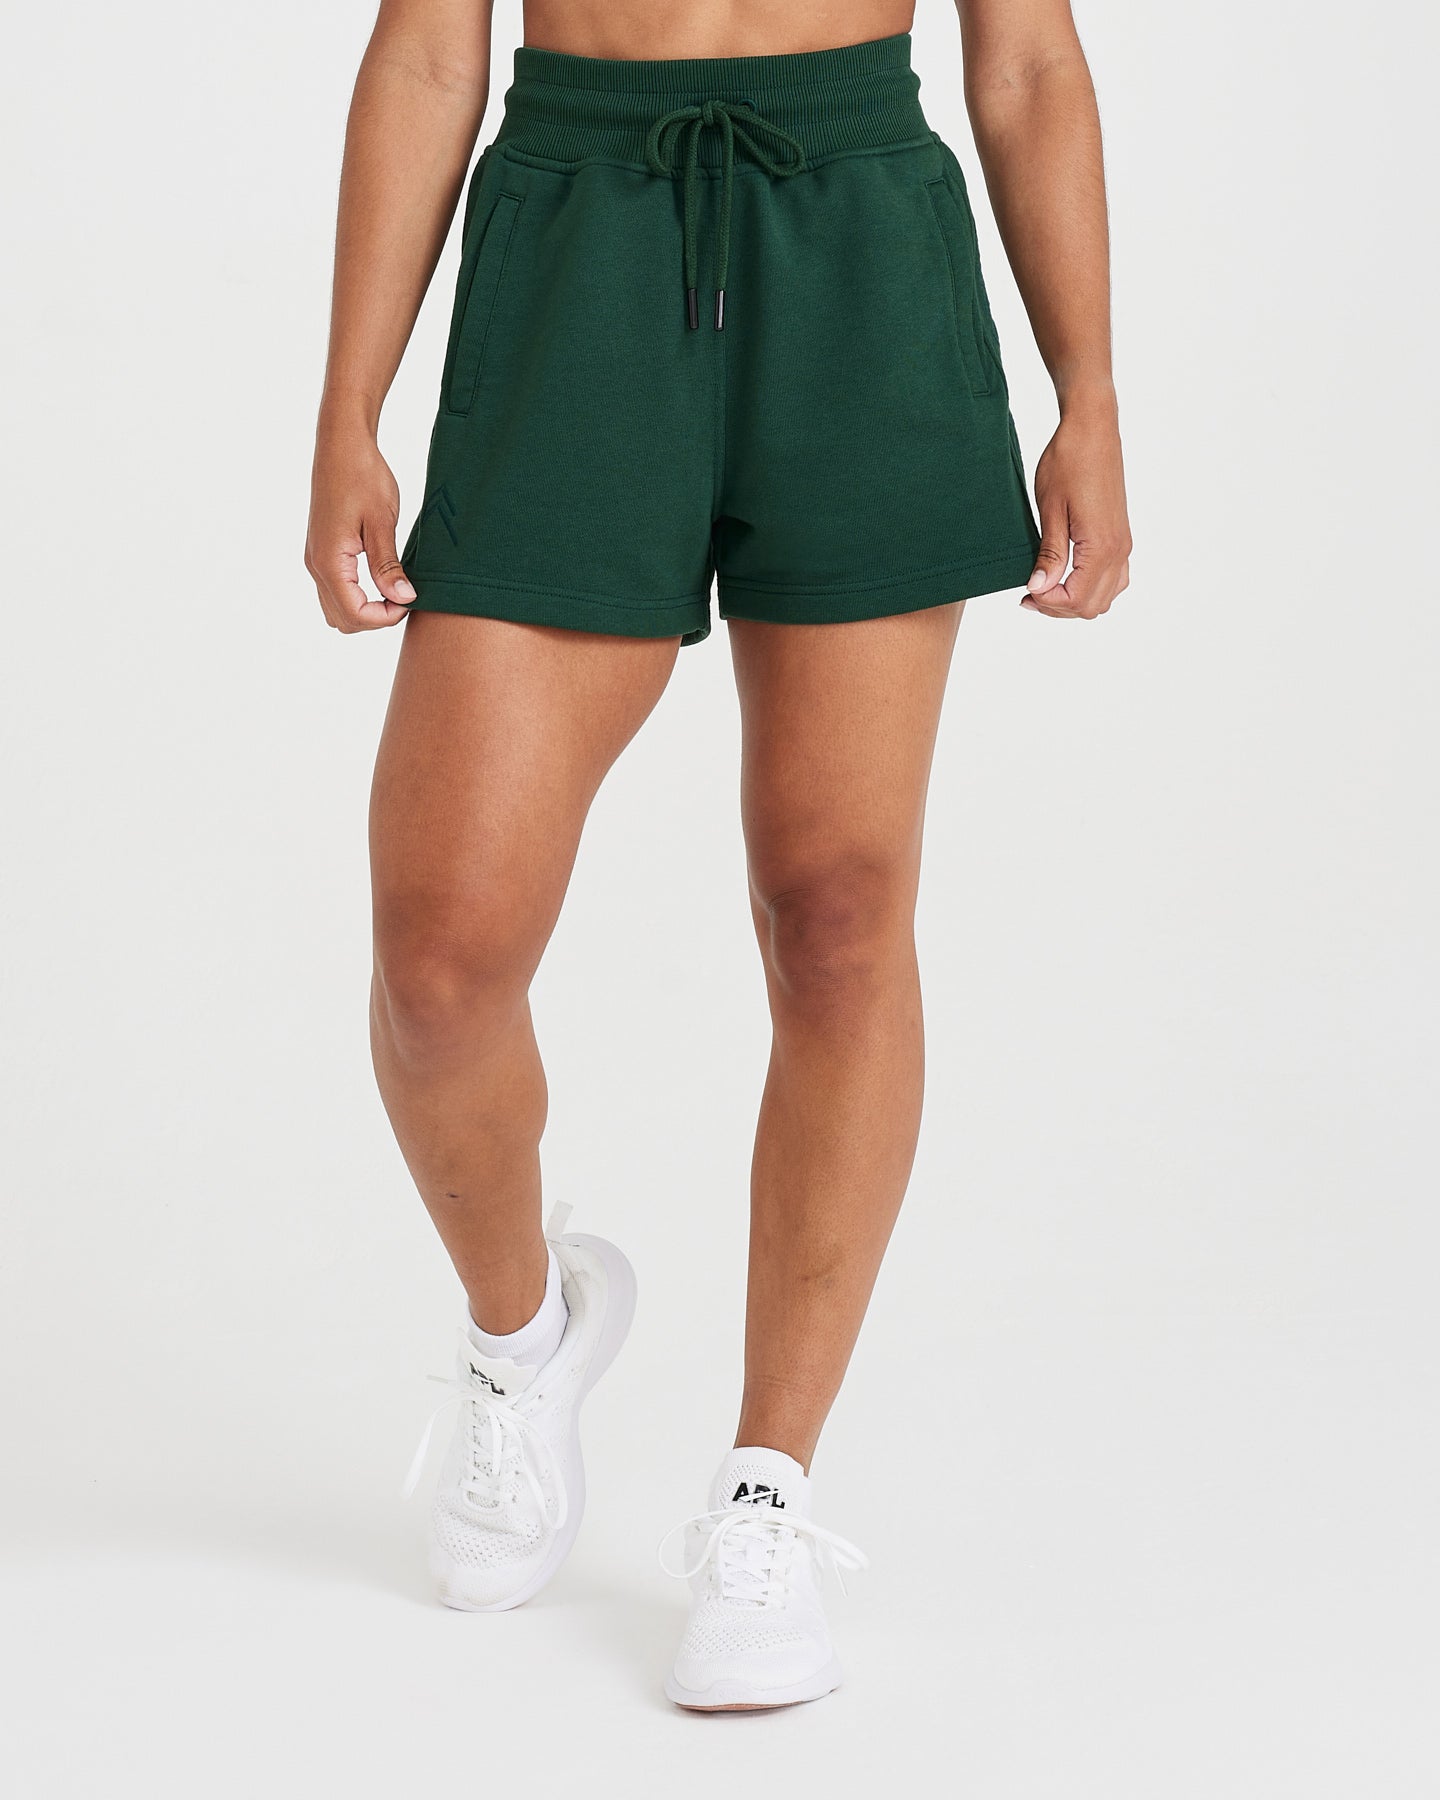 Best Lightweight Shorts for Summer - Evergreen | Oner Active US